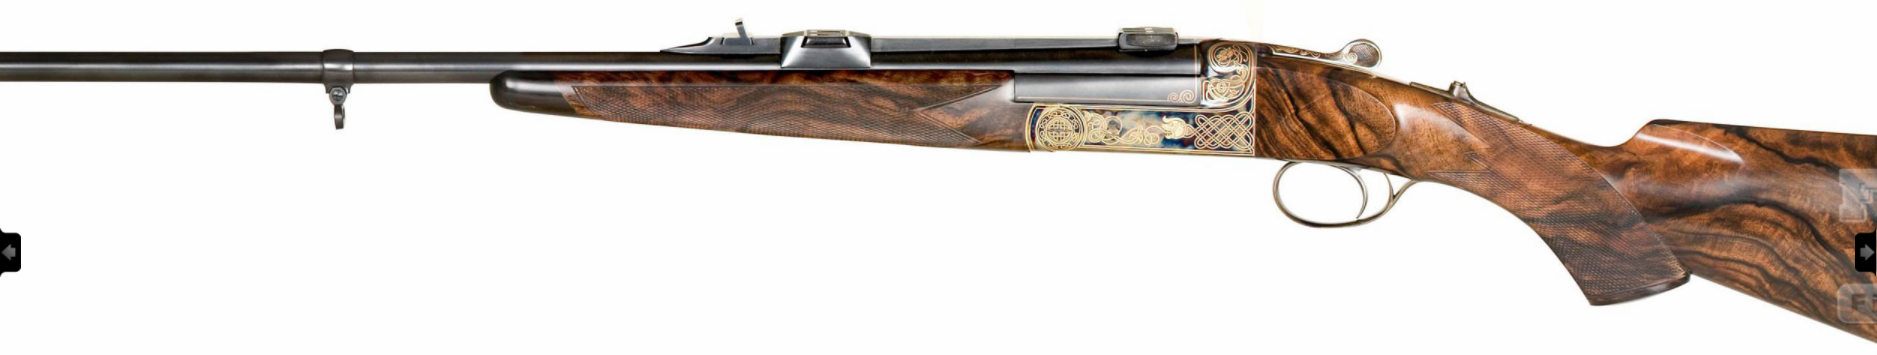 Werner Bartolot Rook Rifle